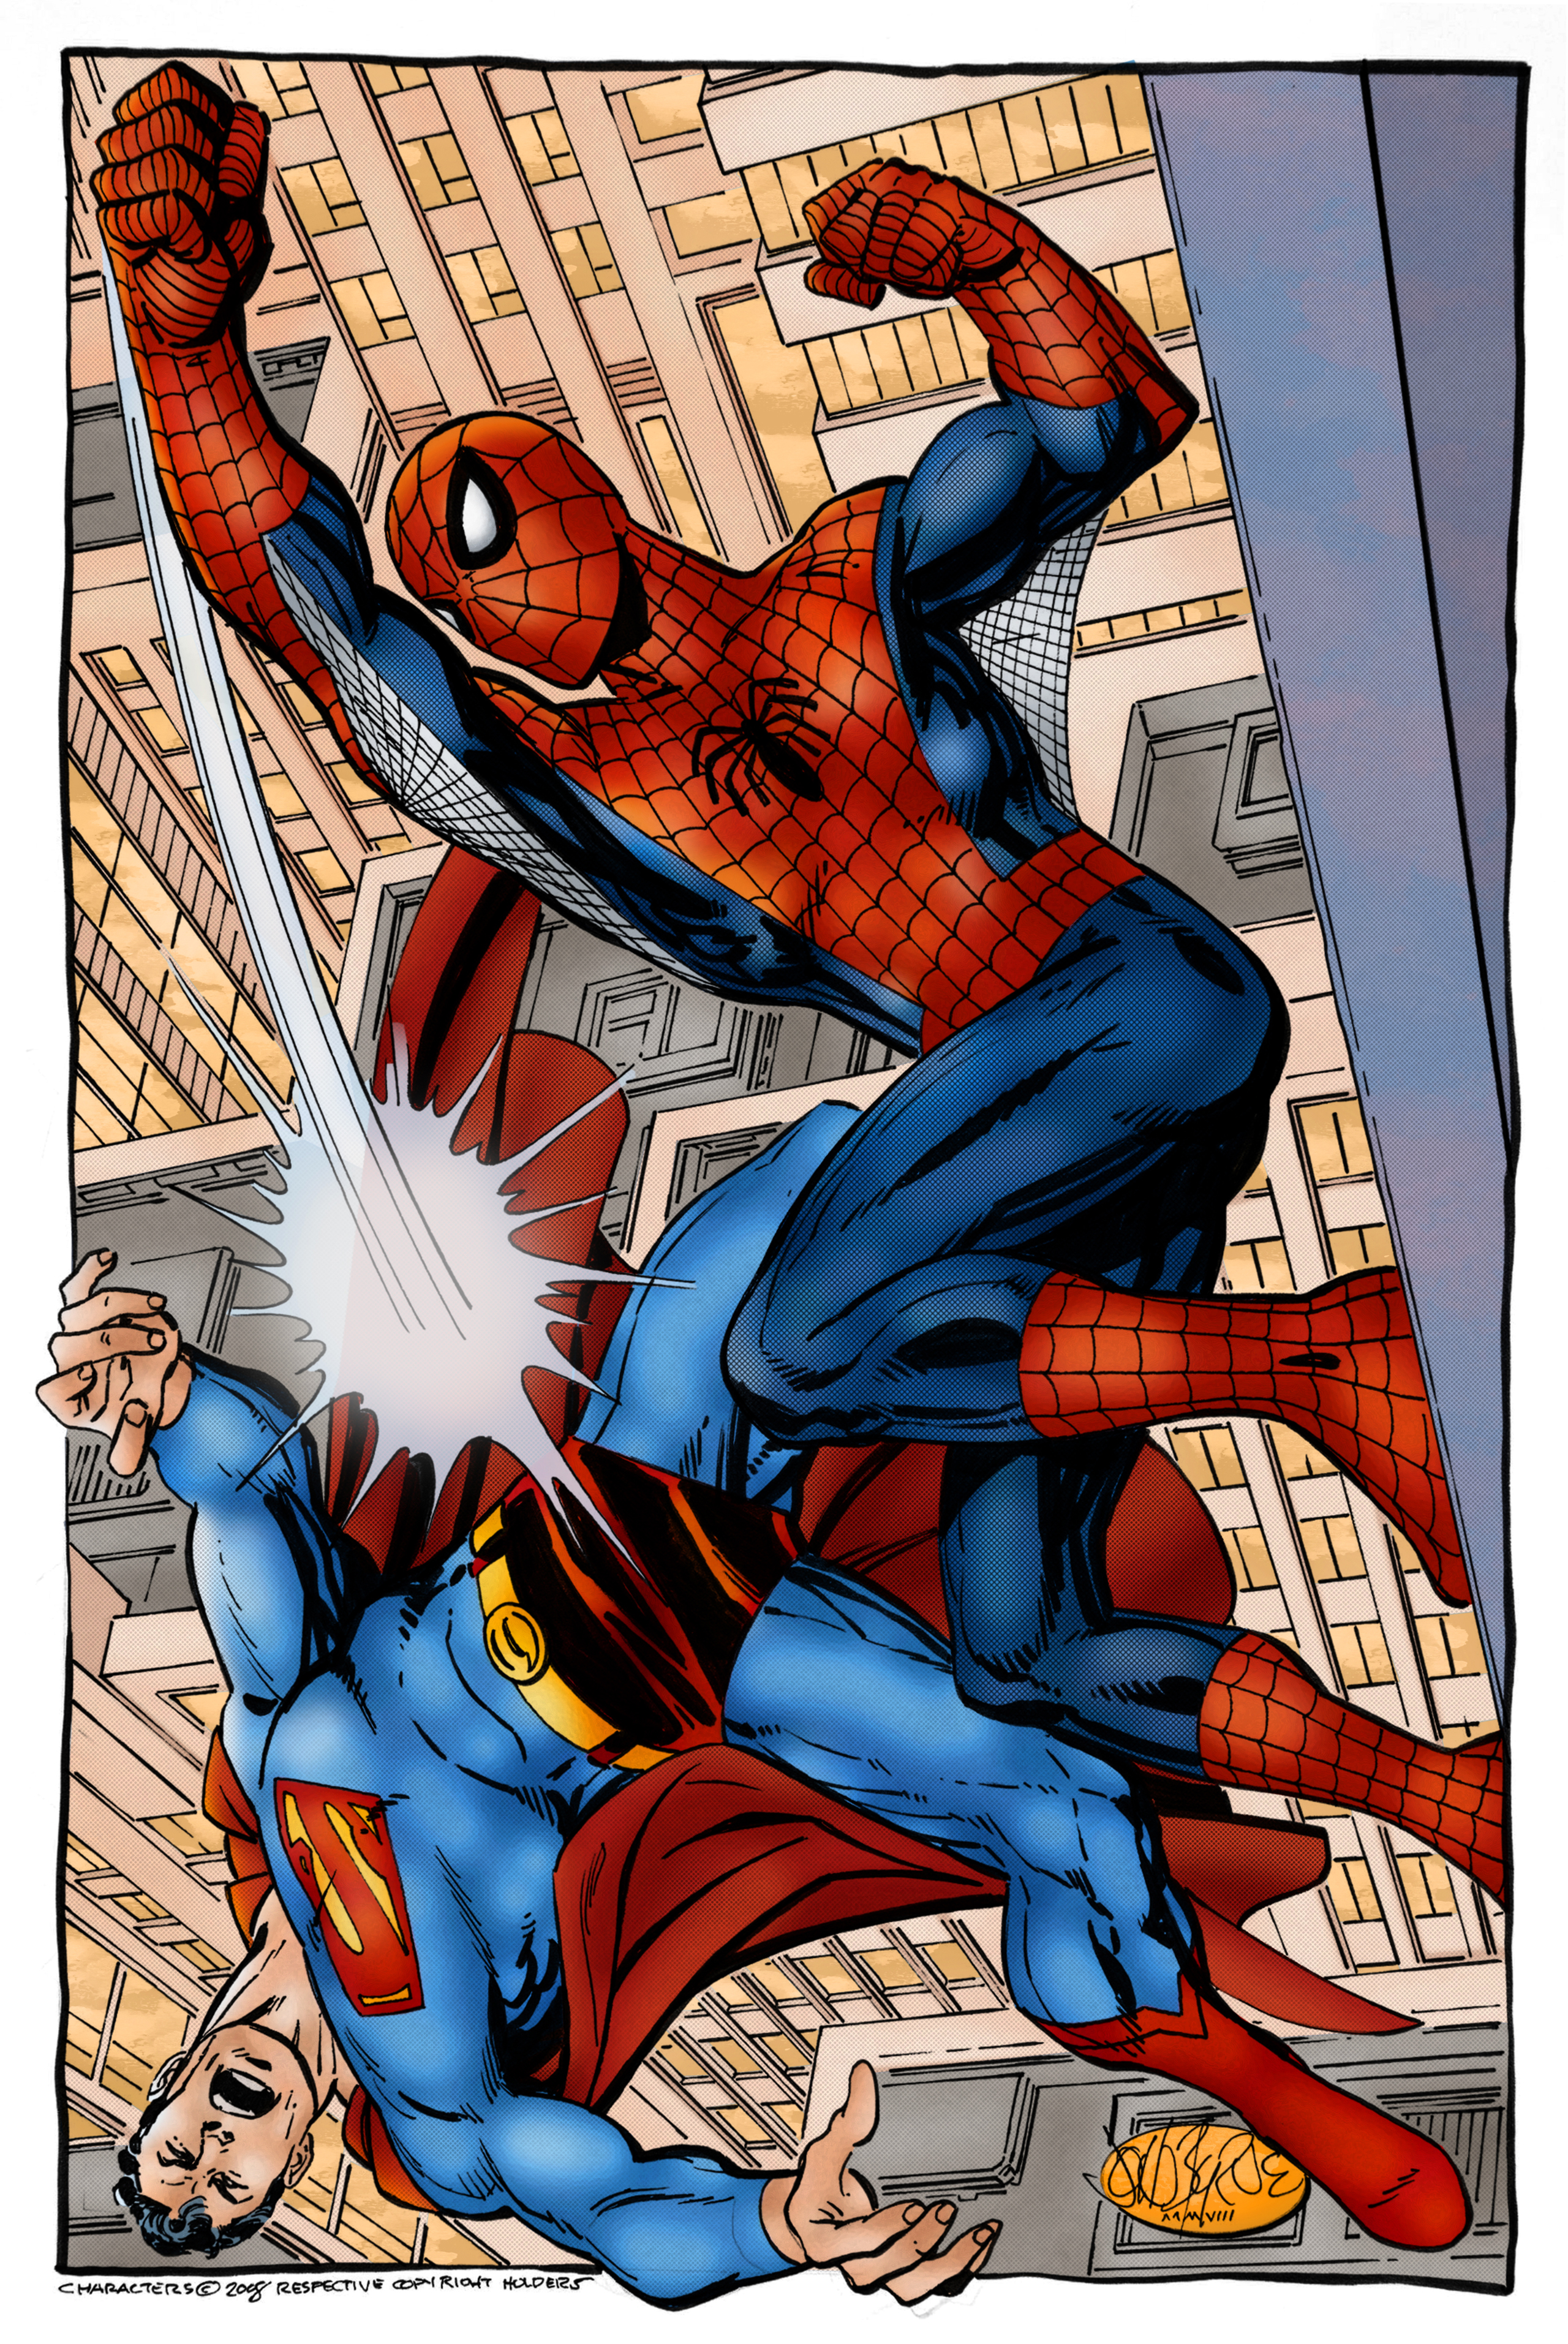 Spider-Man vs. Superman (John Byrne) by xts33 on DeviantArt